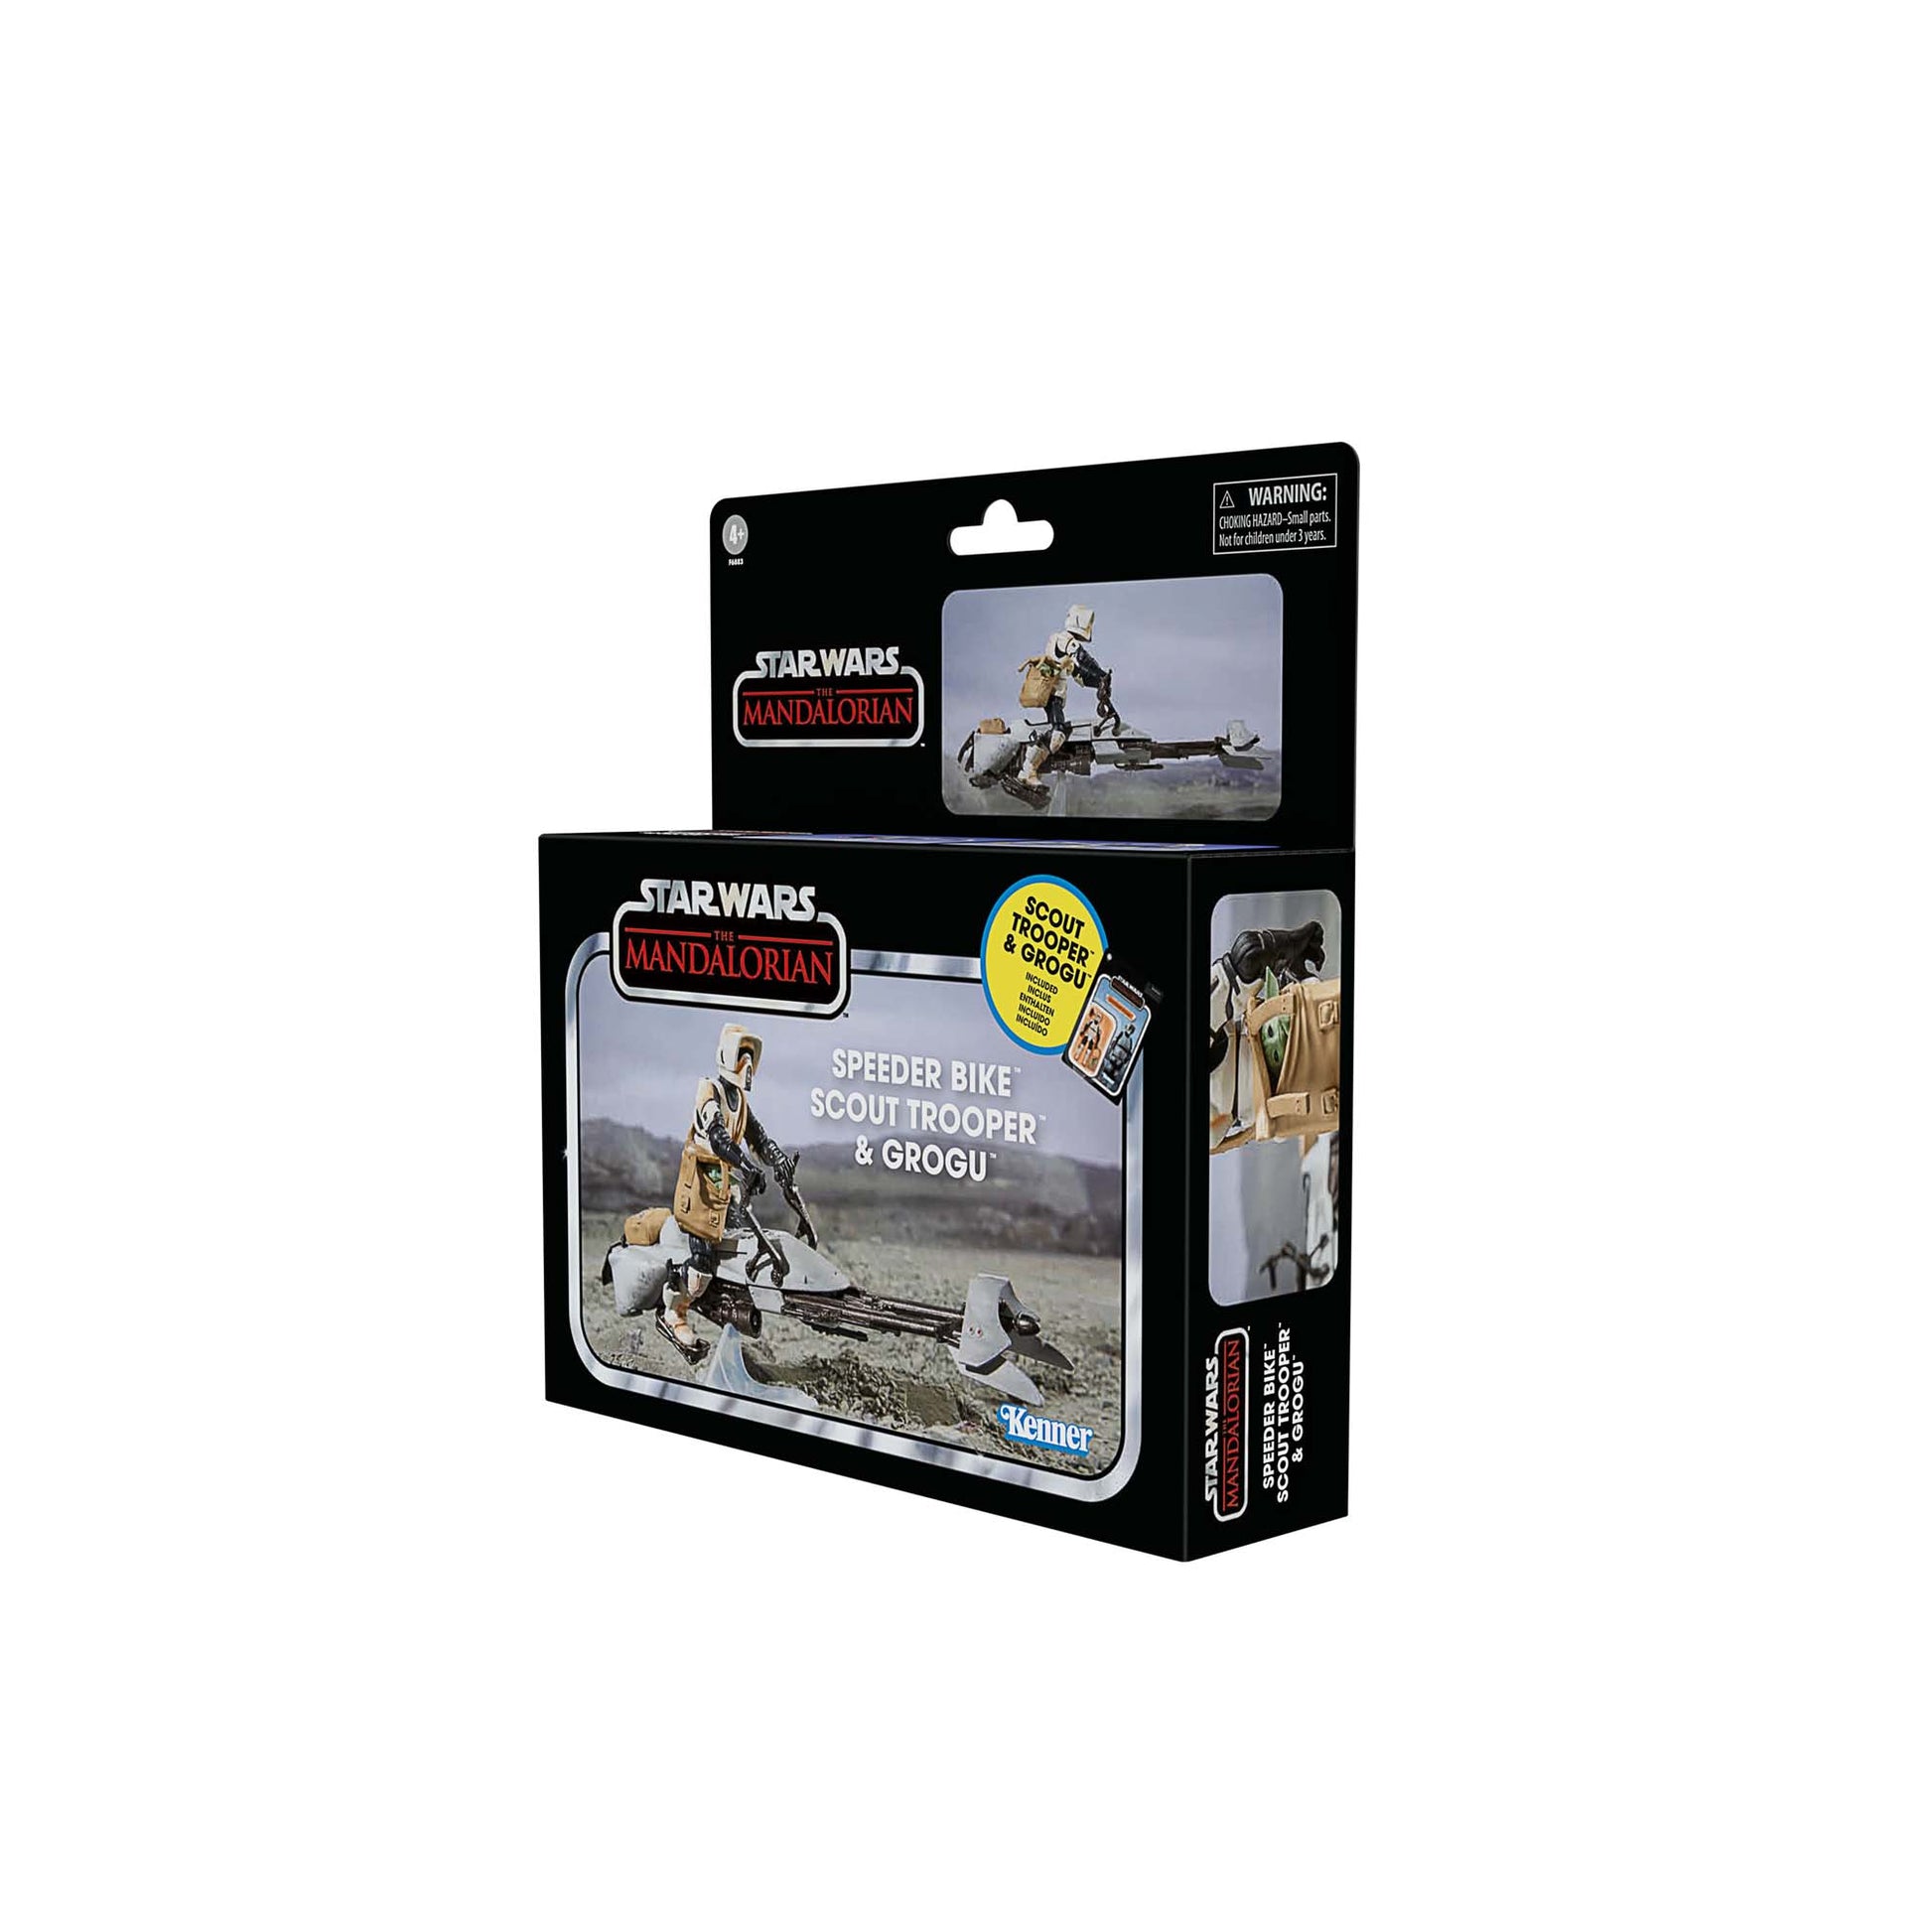 Speeder Bike Scout Trooper & Grogu Box side view - Heretoserveyou